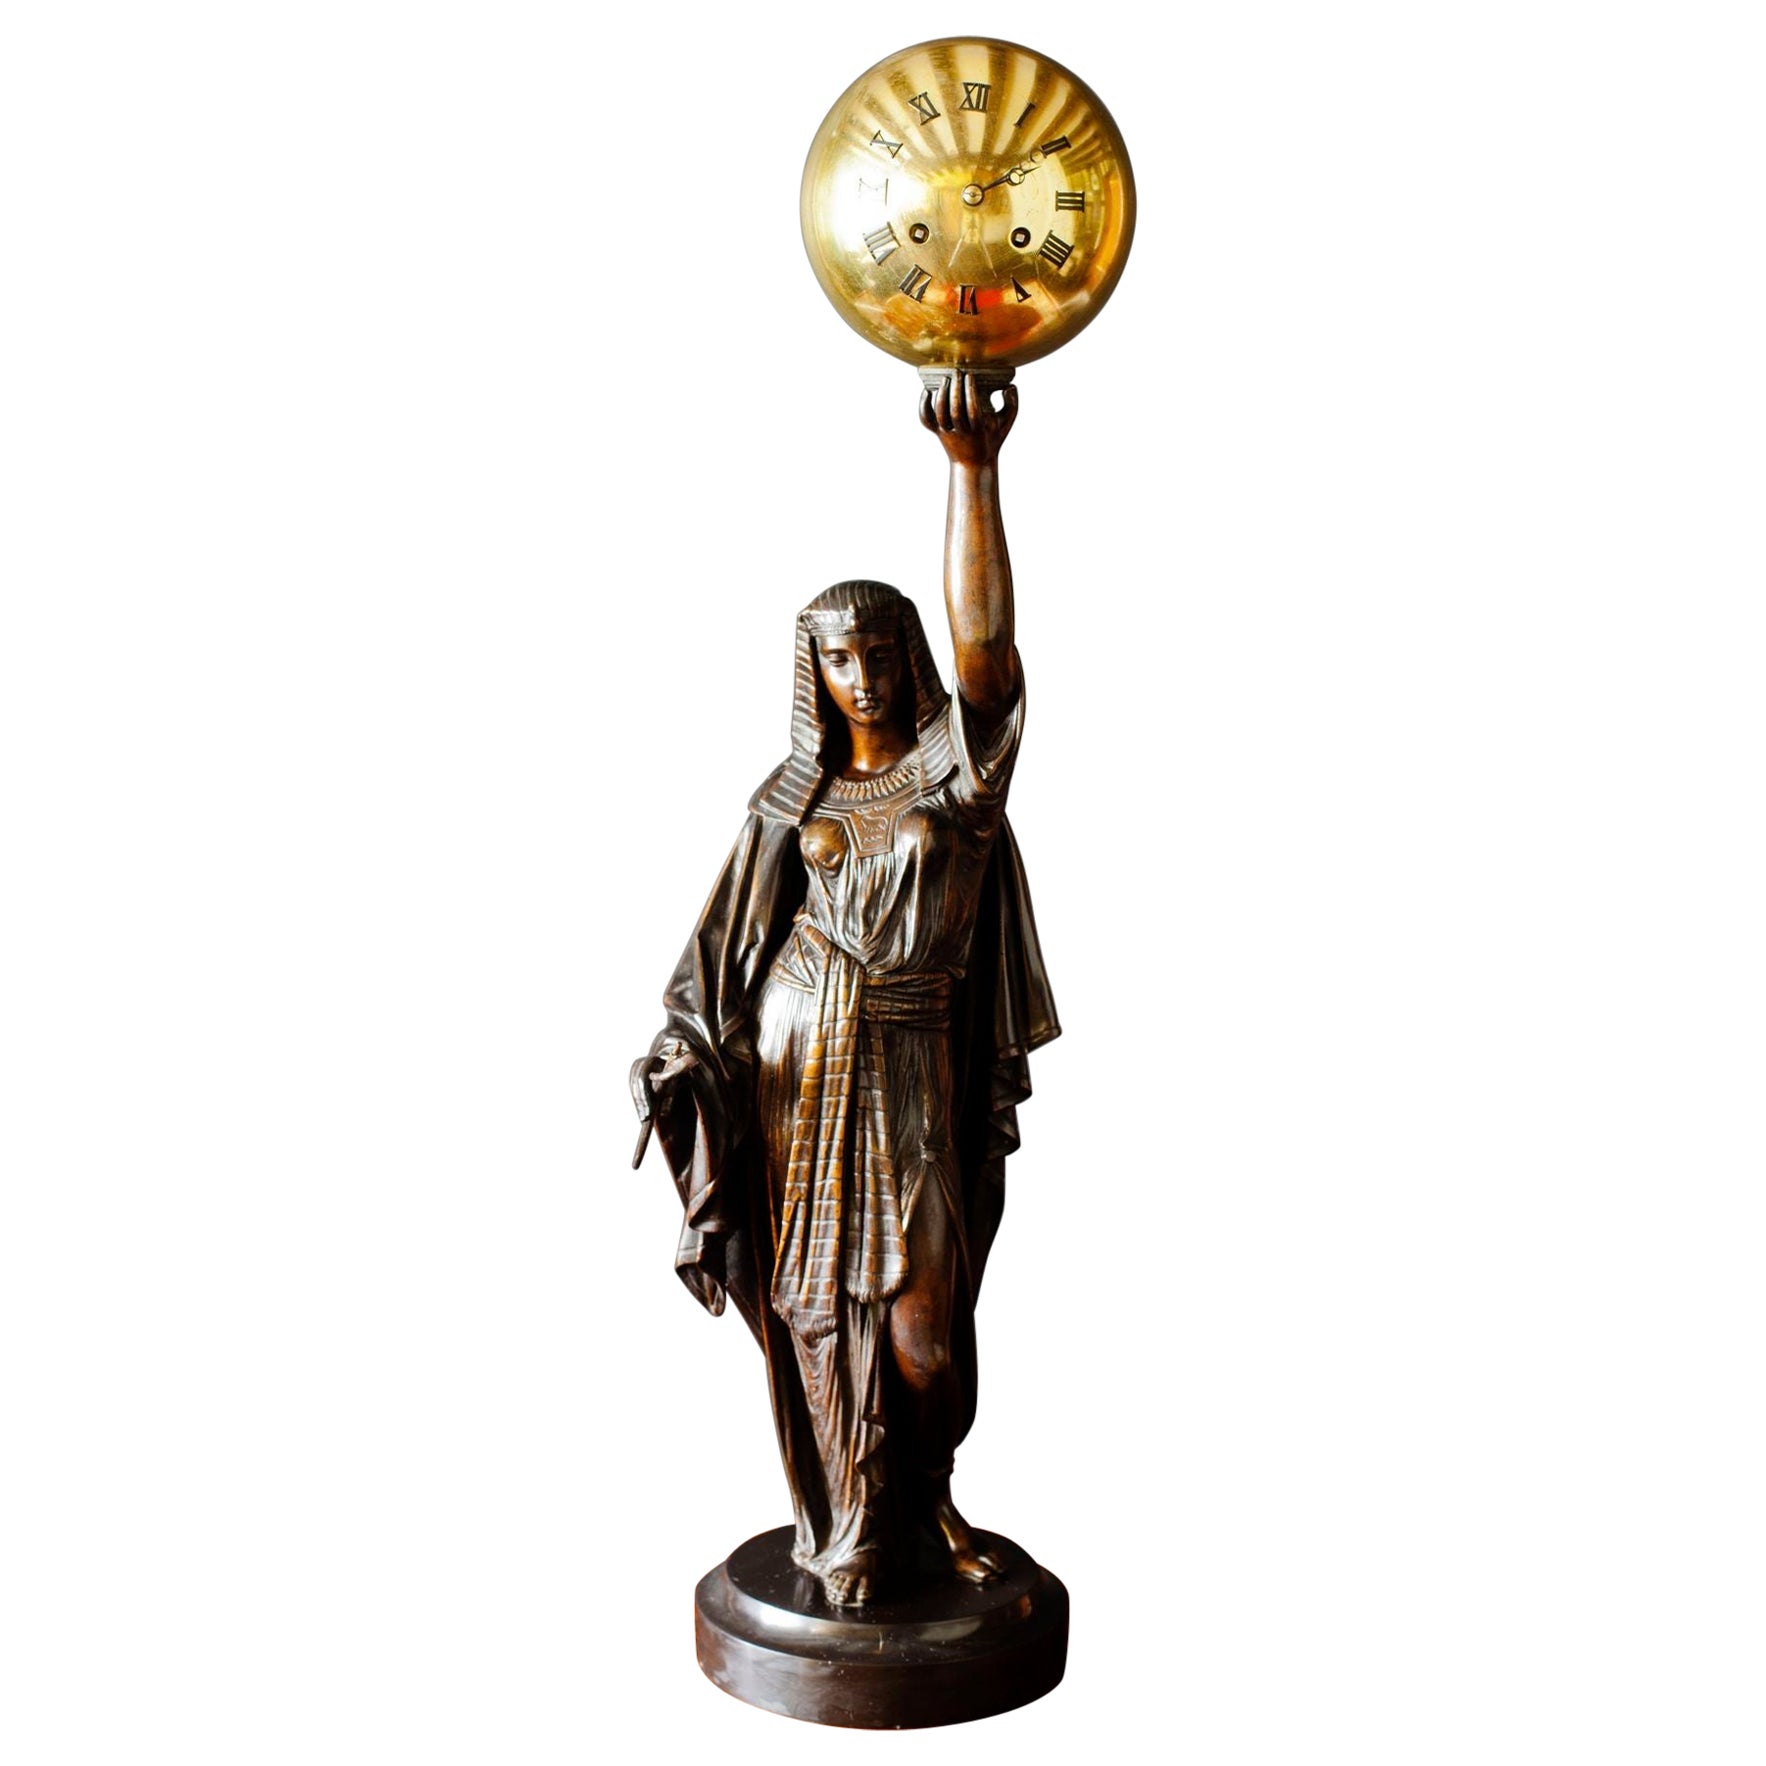 Horloge figurative française en bronze représentant Aurora